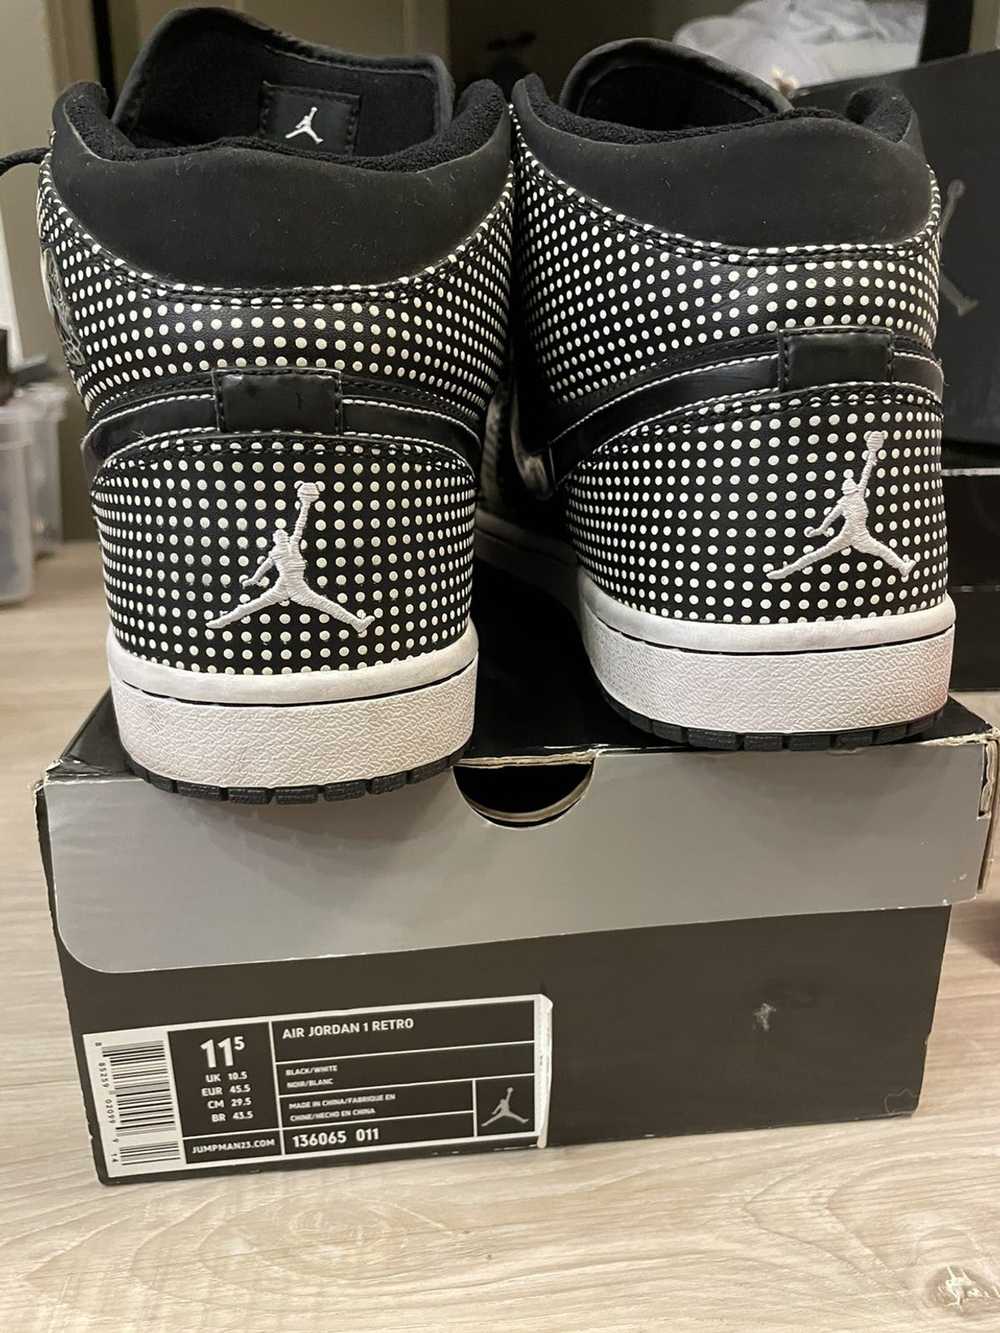 Nike Air Jordan 1 Retro Black White - image 5